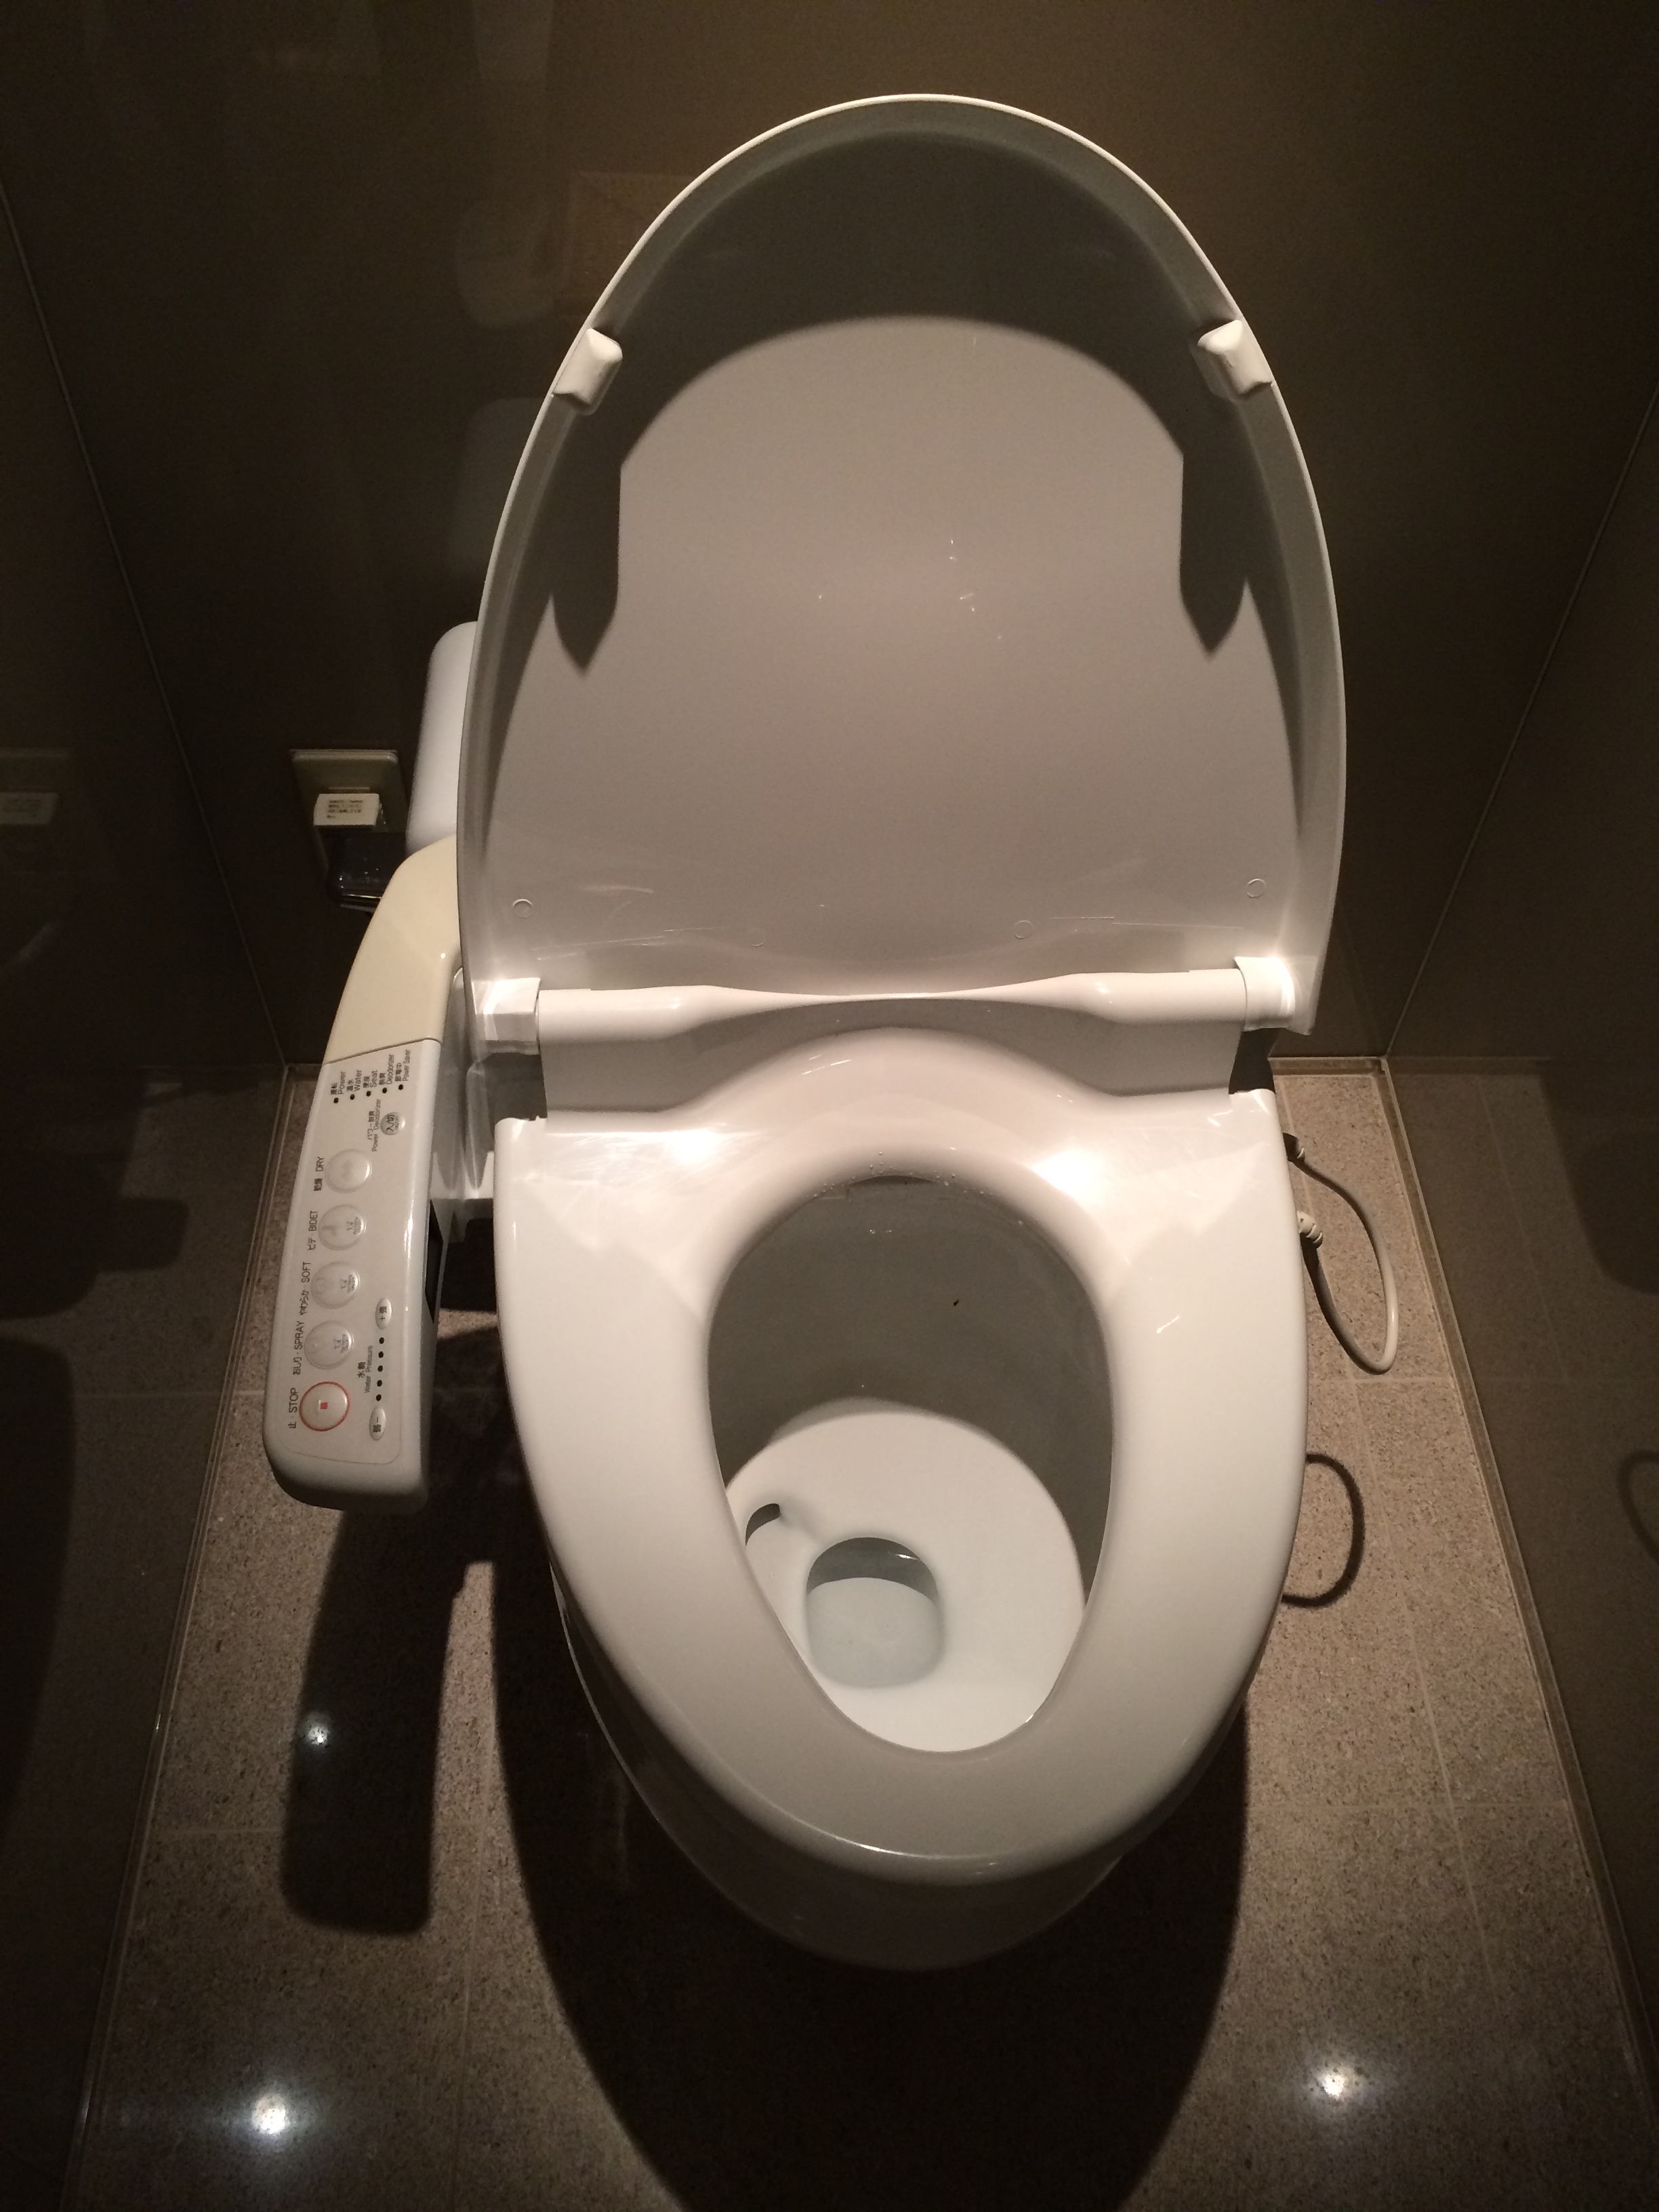 Japanese toilet